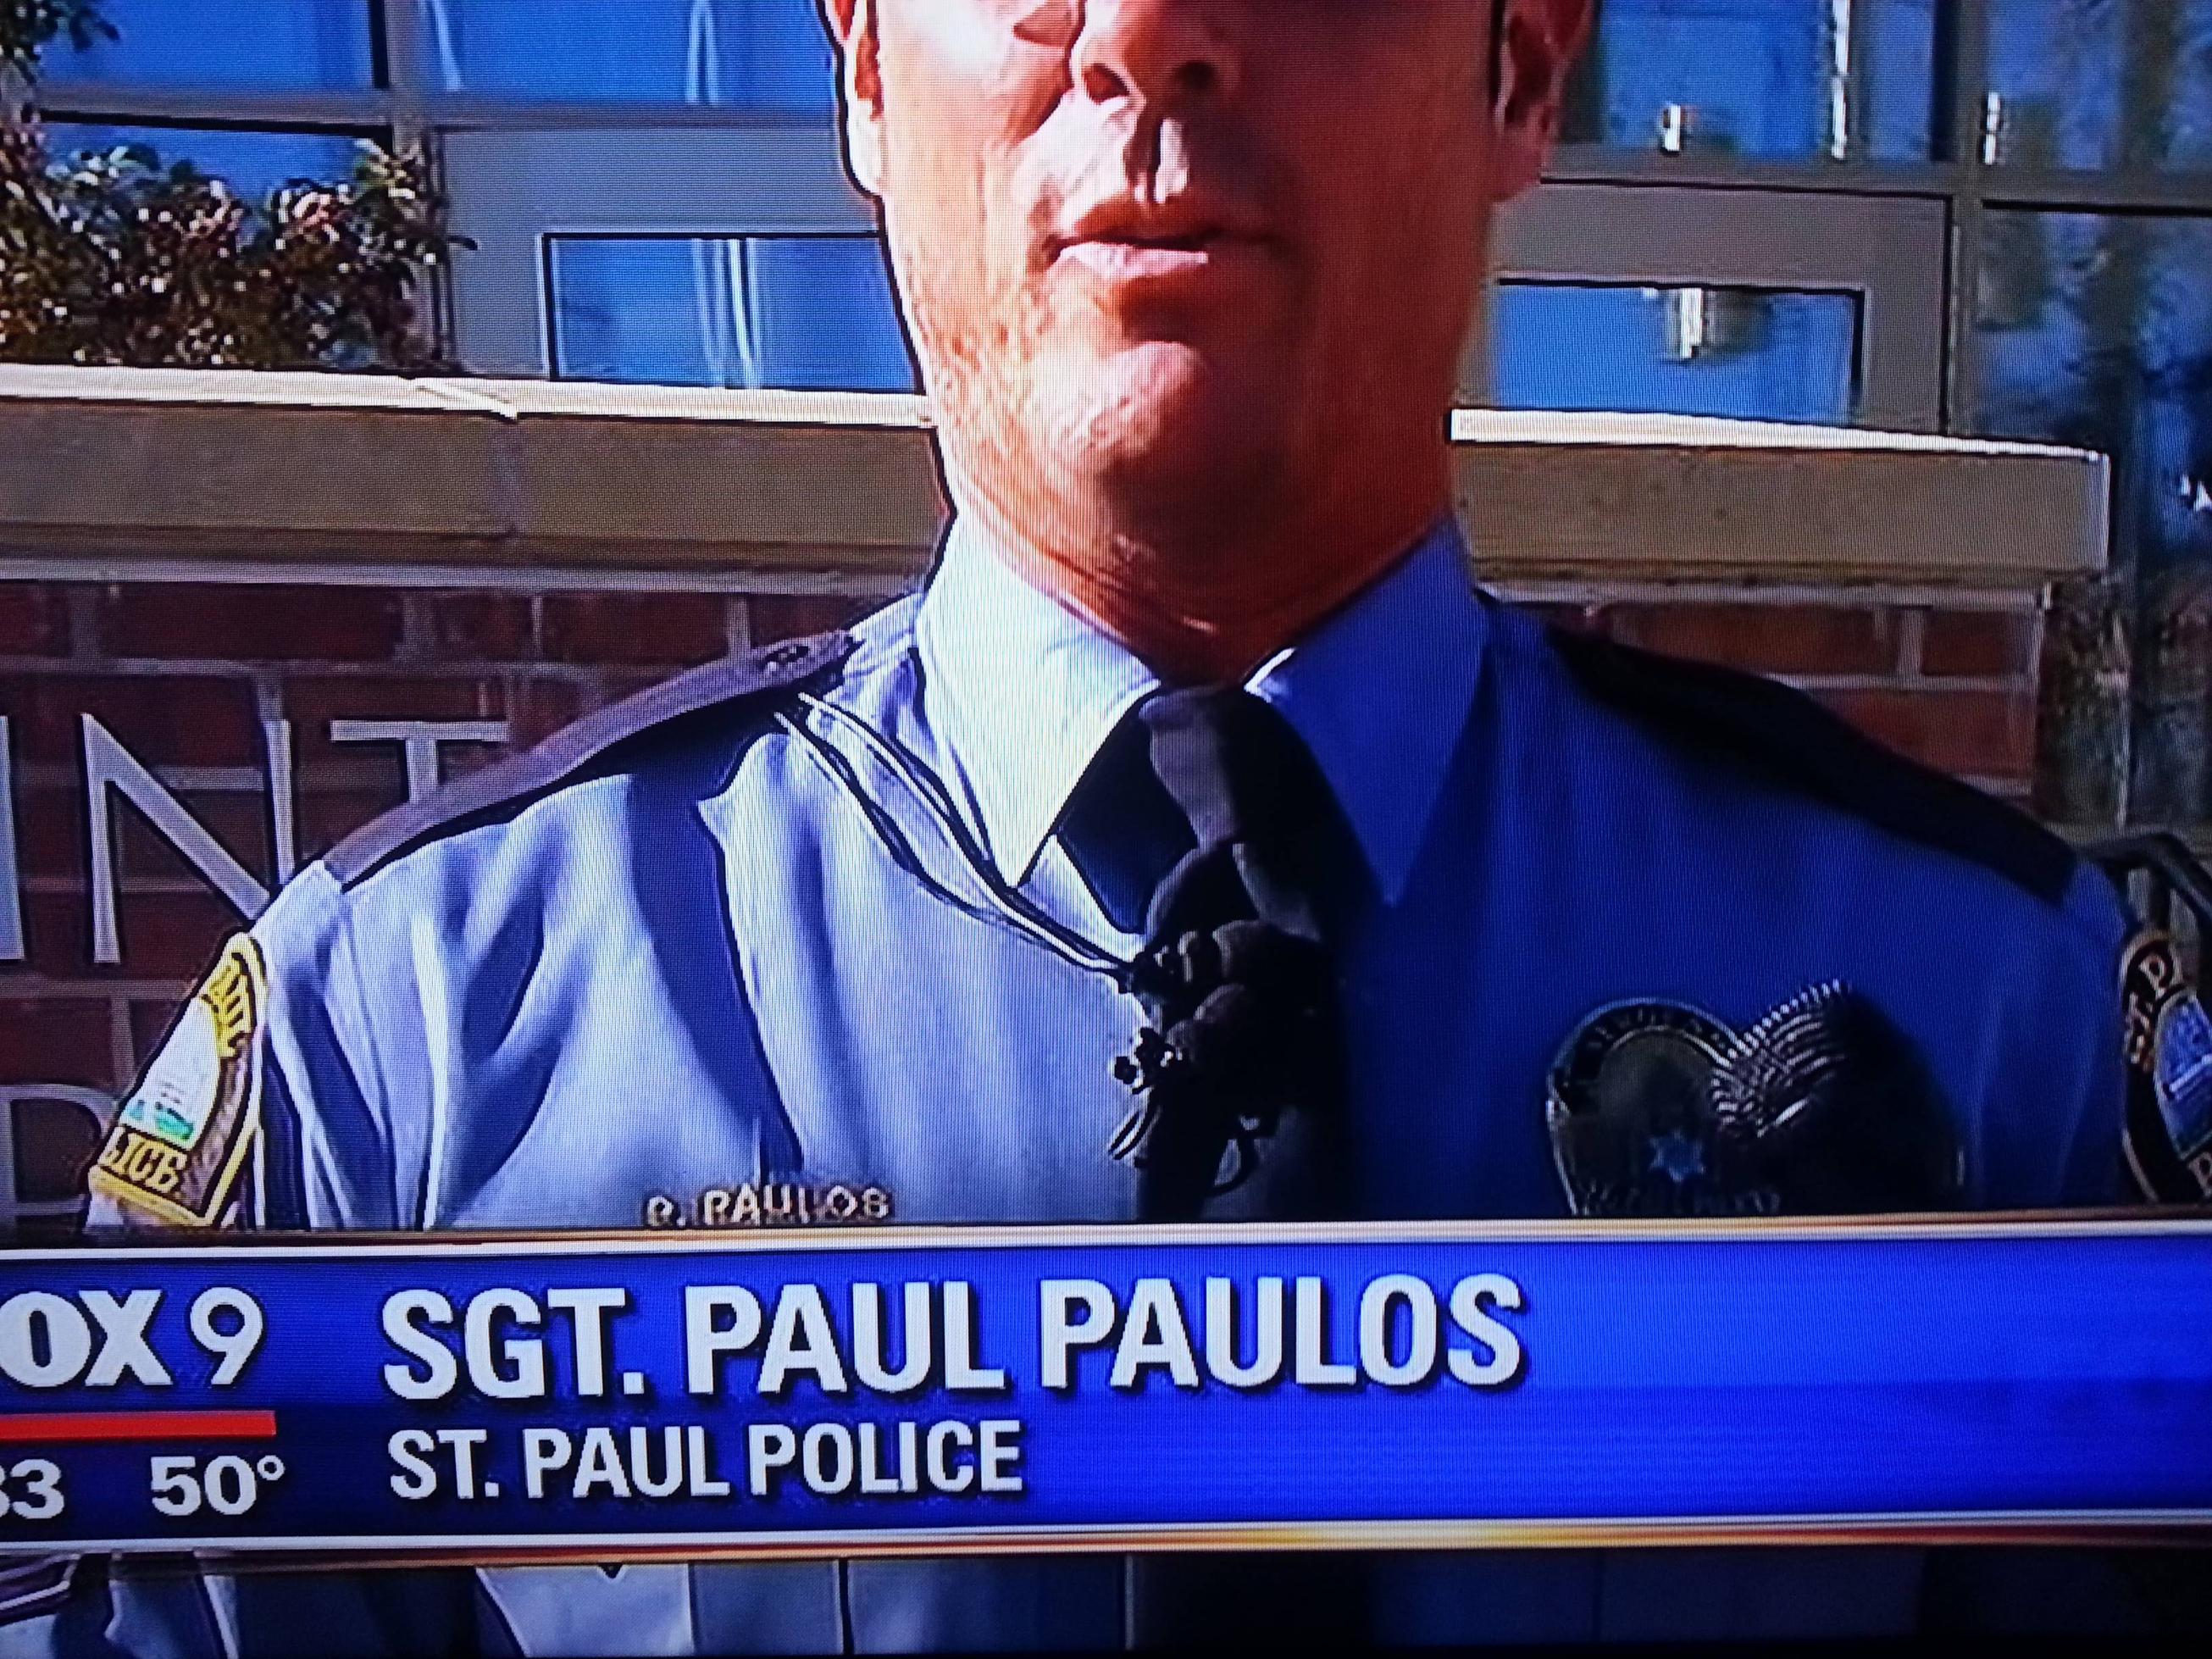 funny job names - Draulos OX9 Sgt. Paul Paulos 3 50 St. Paul Police